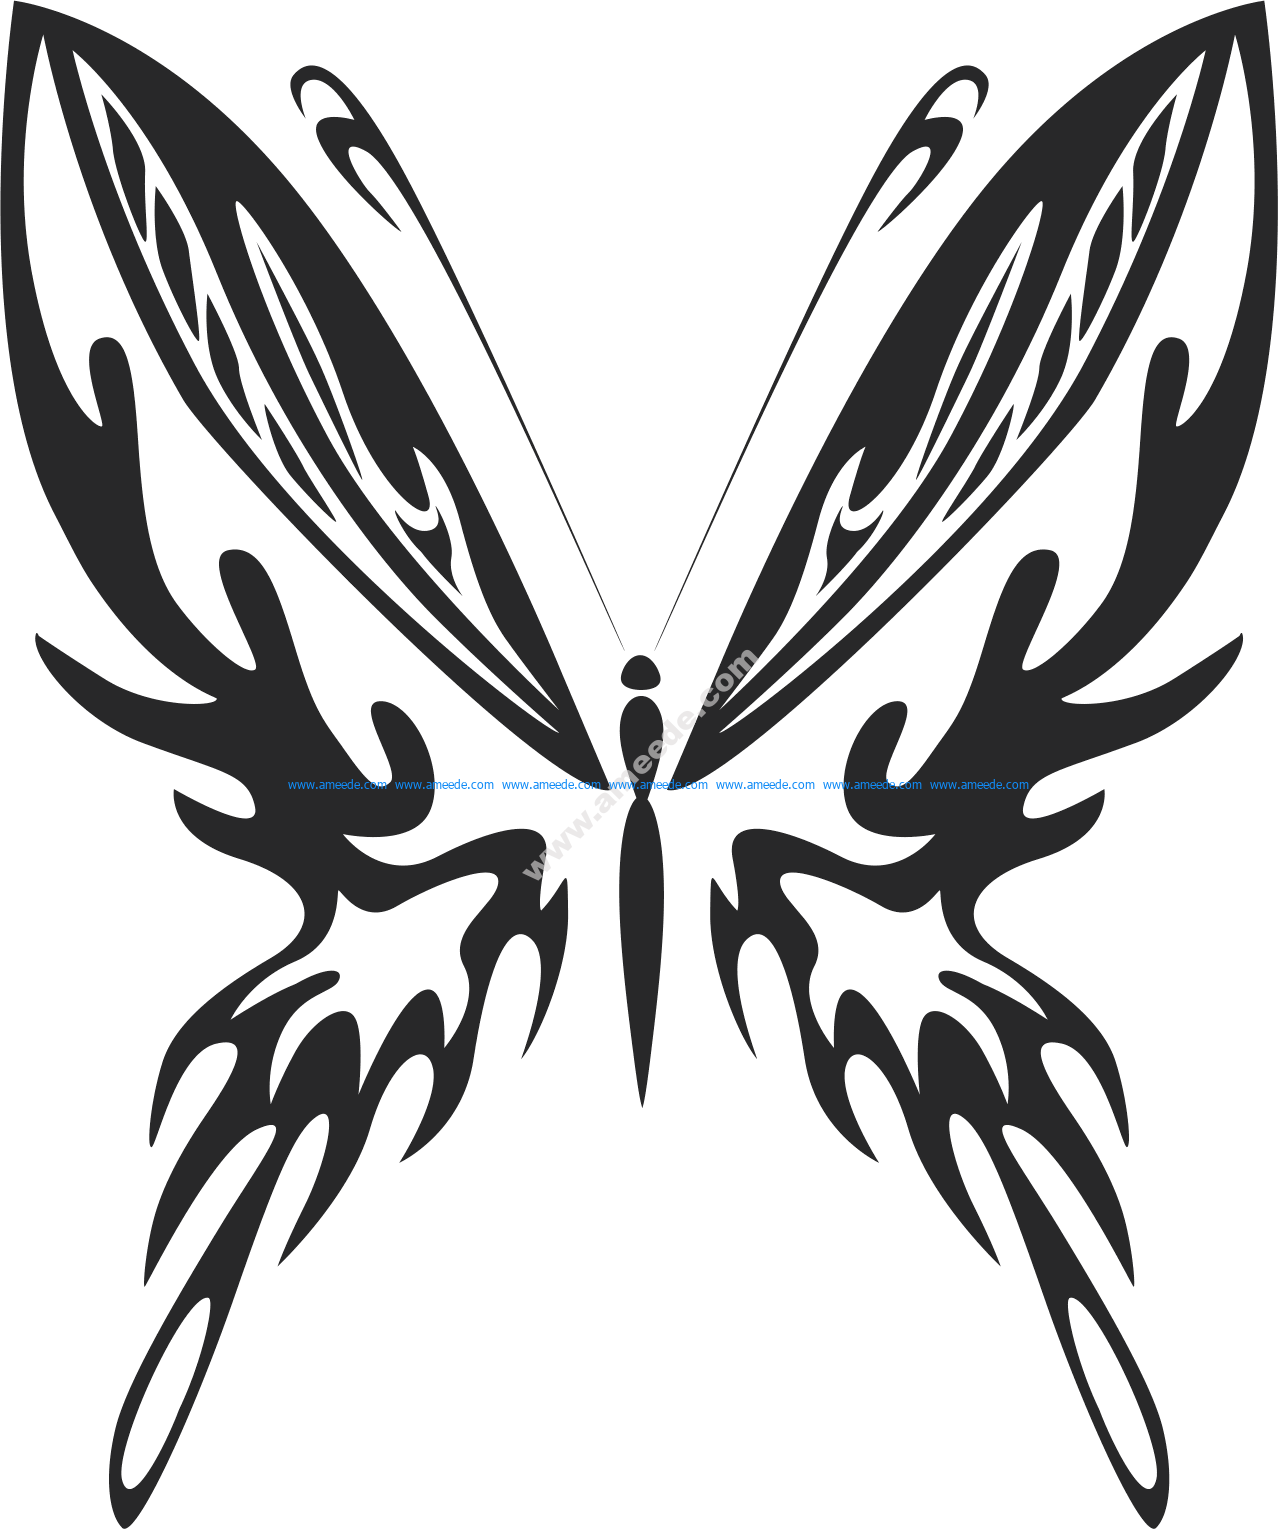 Download Tribal Butterfly Vector Art 23 - Download Vector